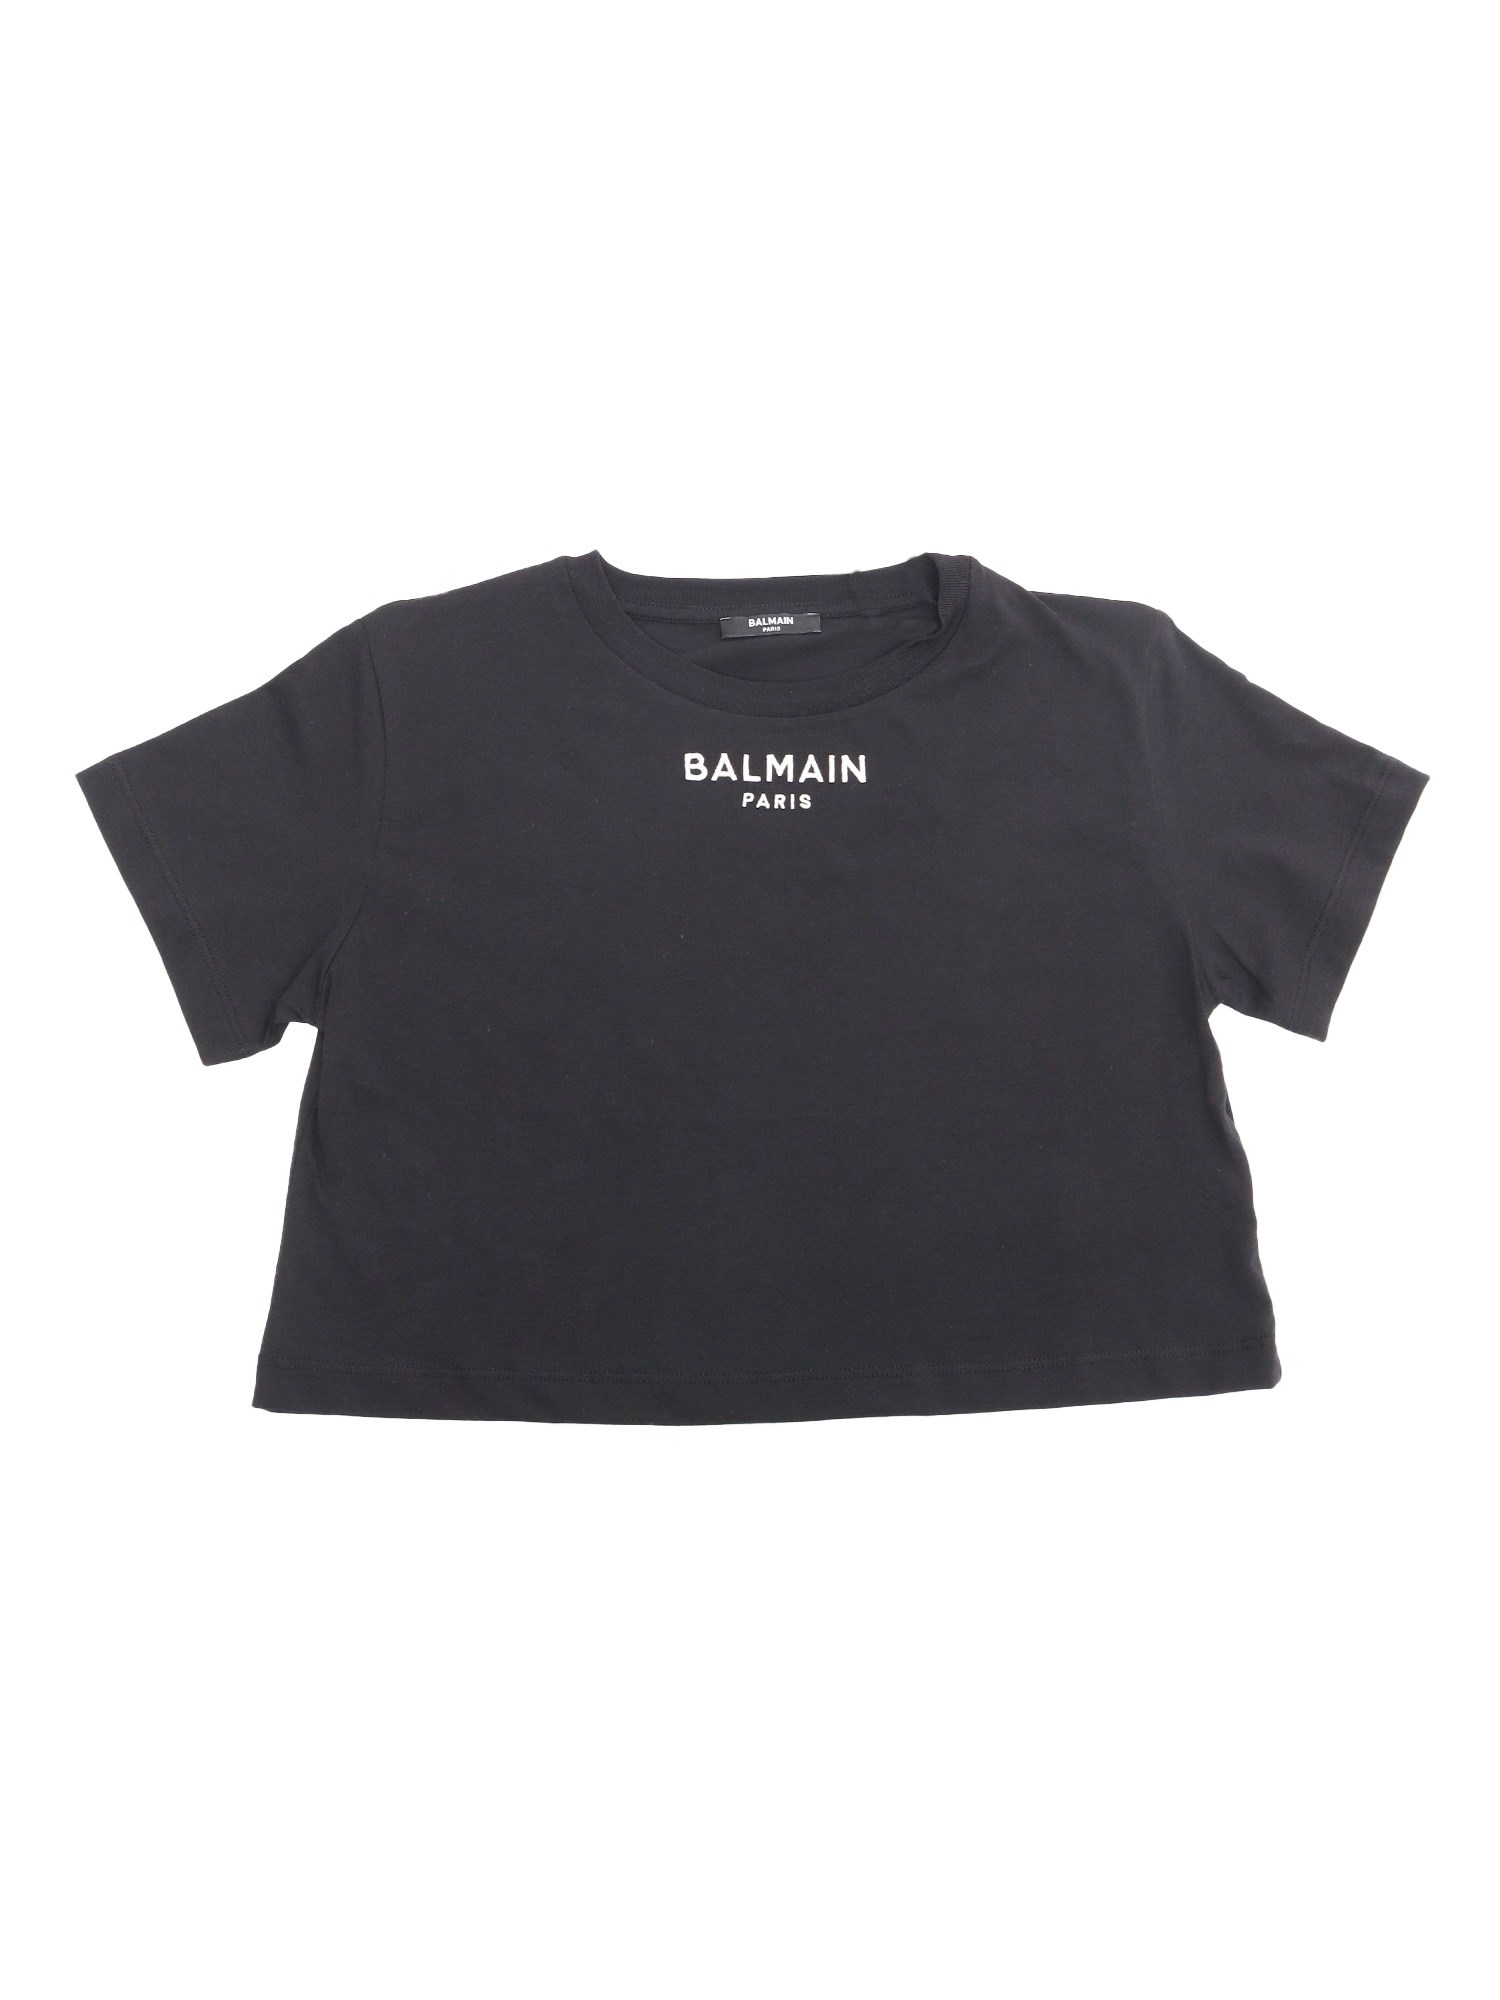 Balmain Black Cropped T-shirt